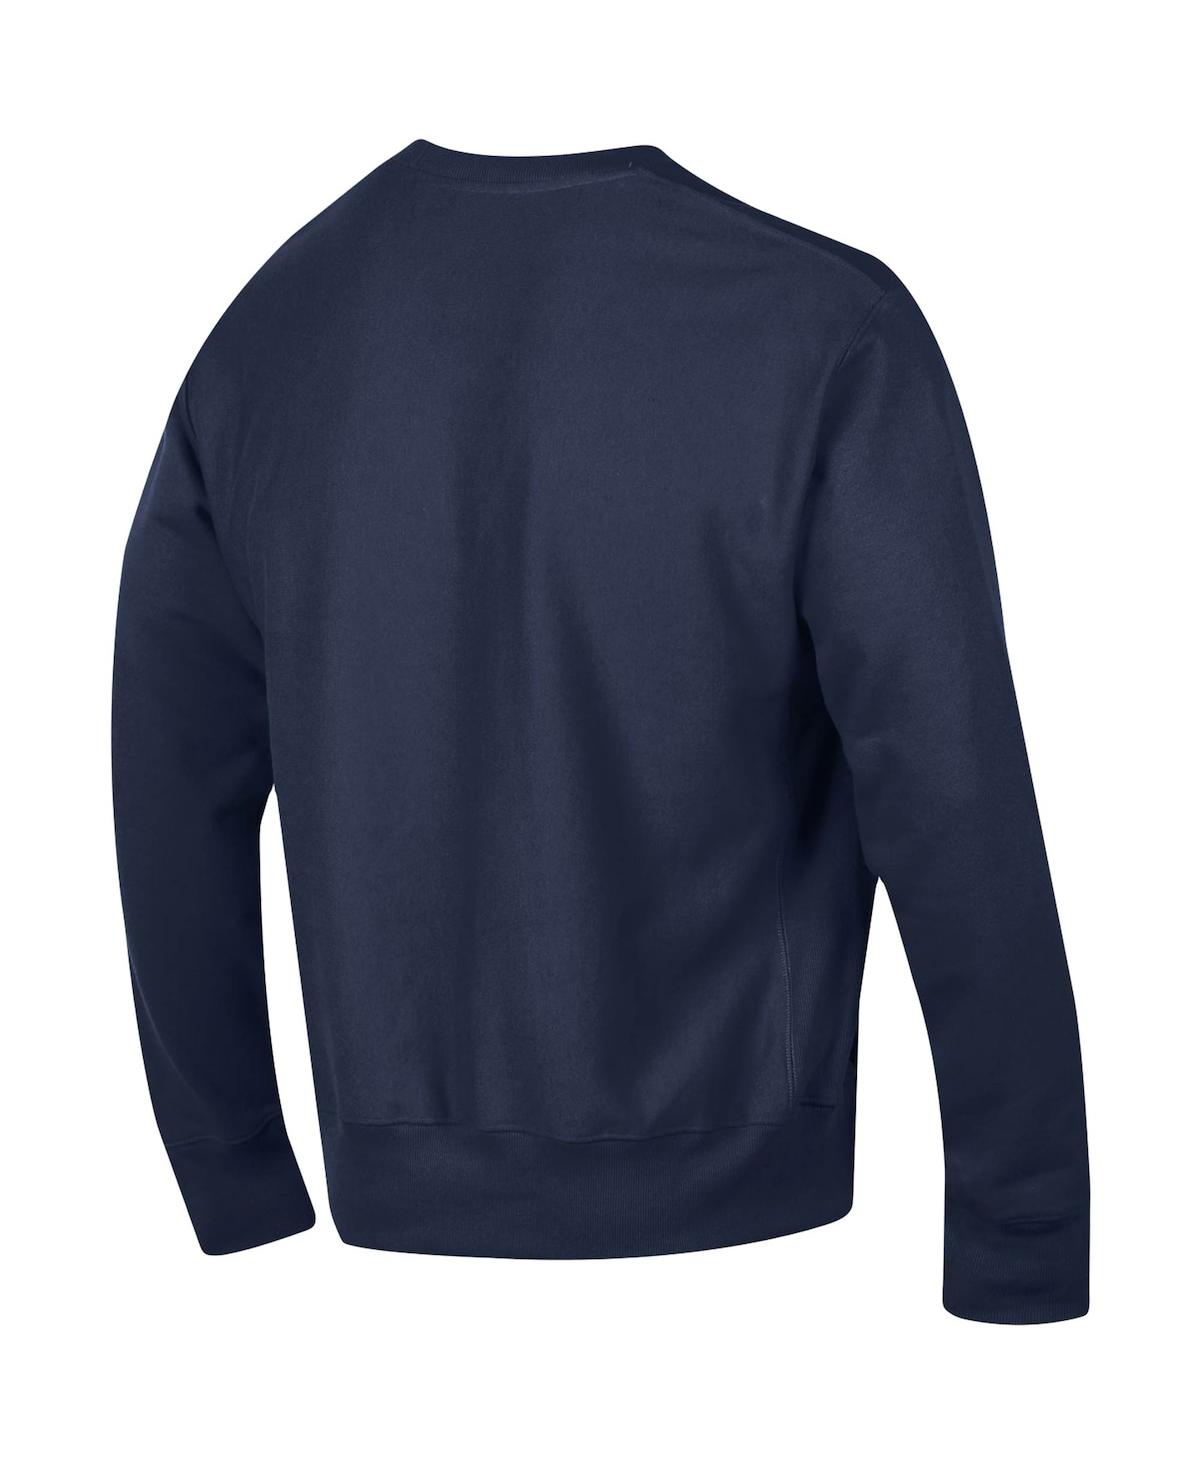 Shop Champion Men's  Navy Cal Bears Arch Reverse Weave Pullover Sweatshirt